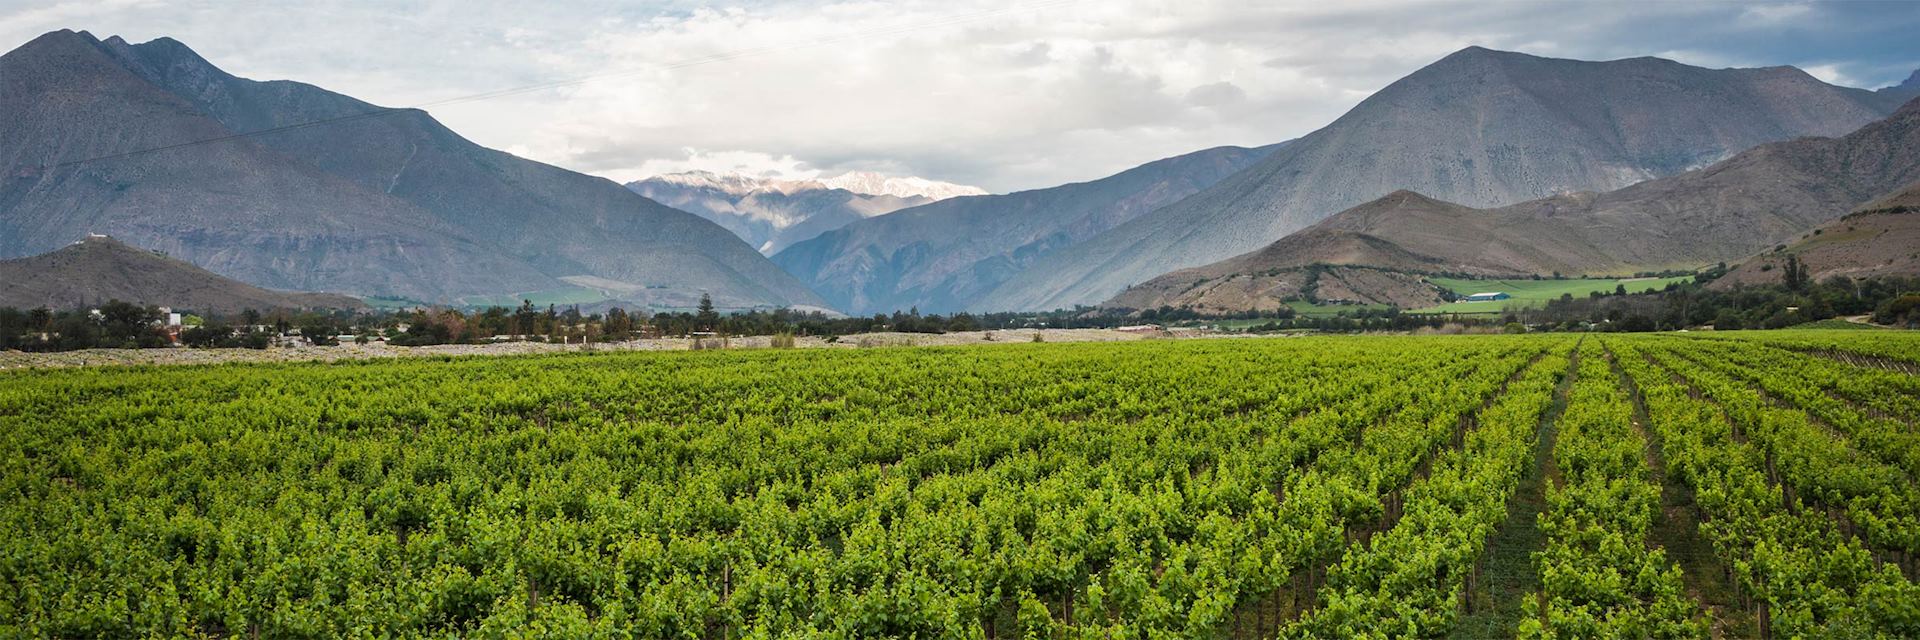 Elqui Valley vineyard